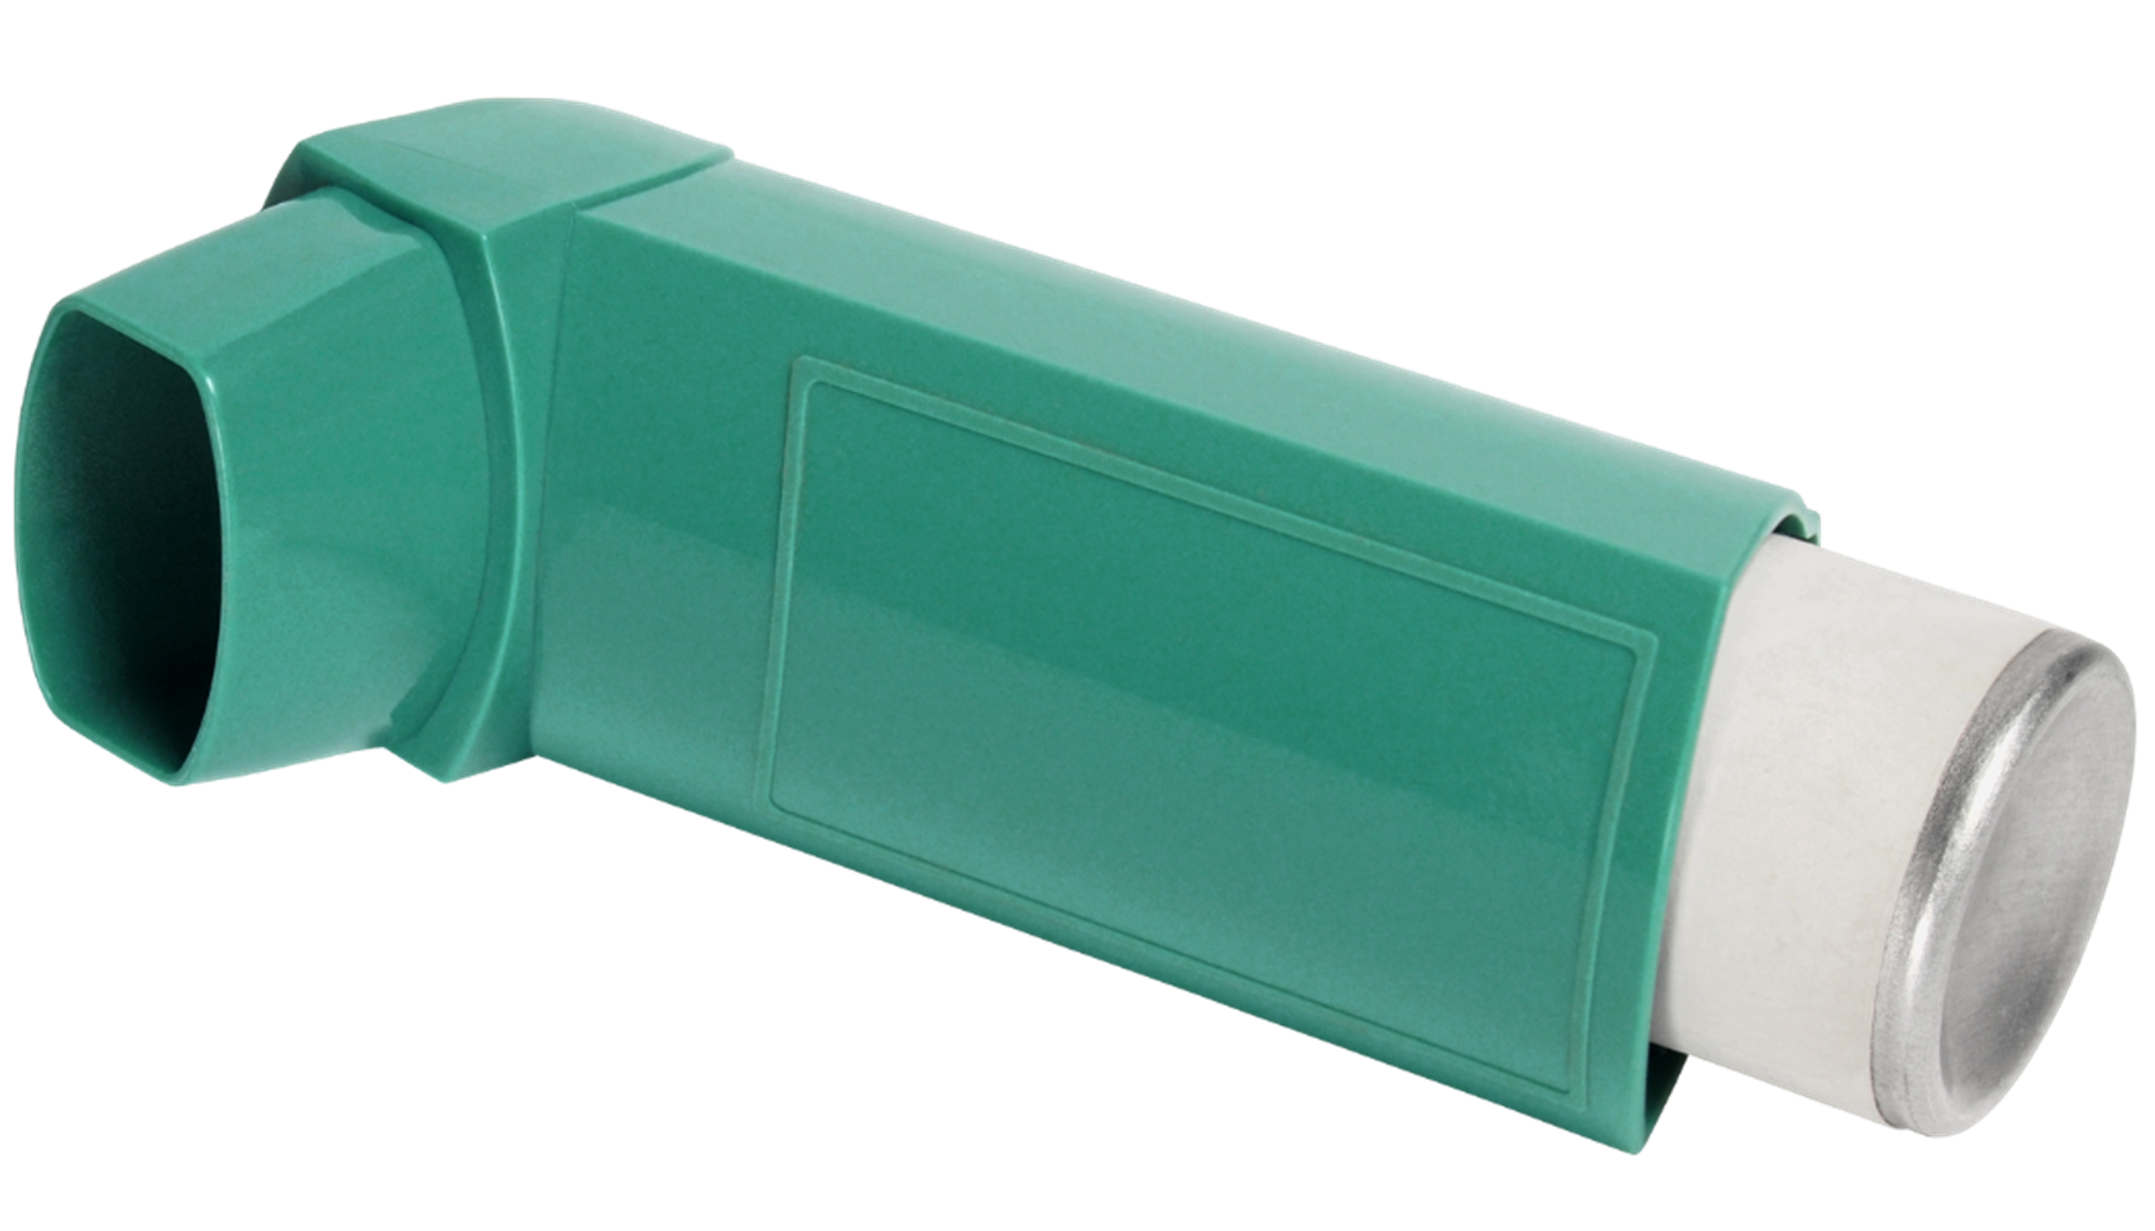 Asthma and Pregnancy inhaler